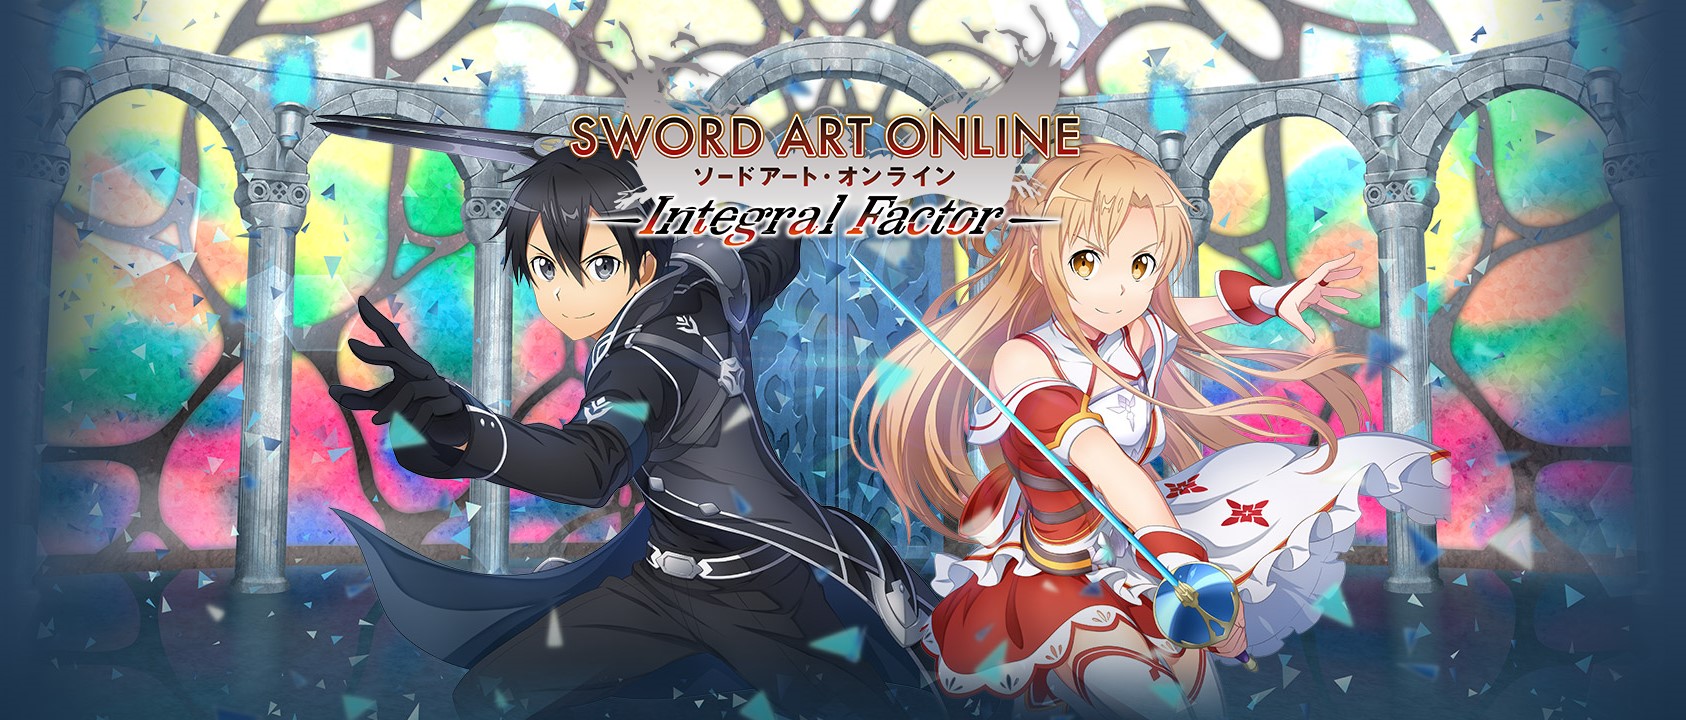 Download do APK de Sword Art - Online Games para Android